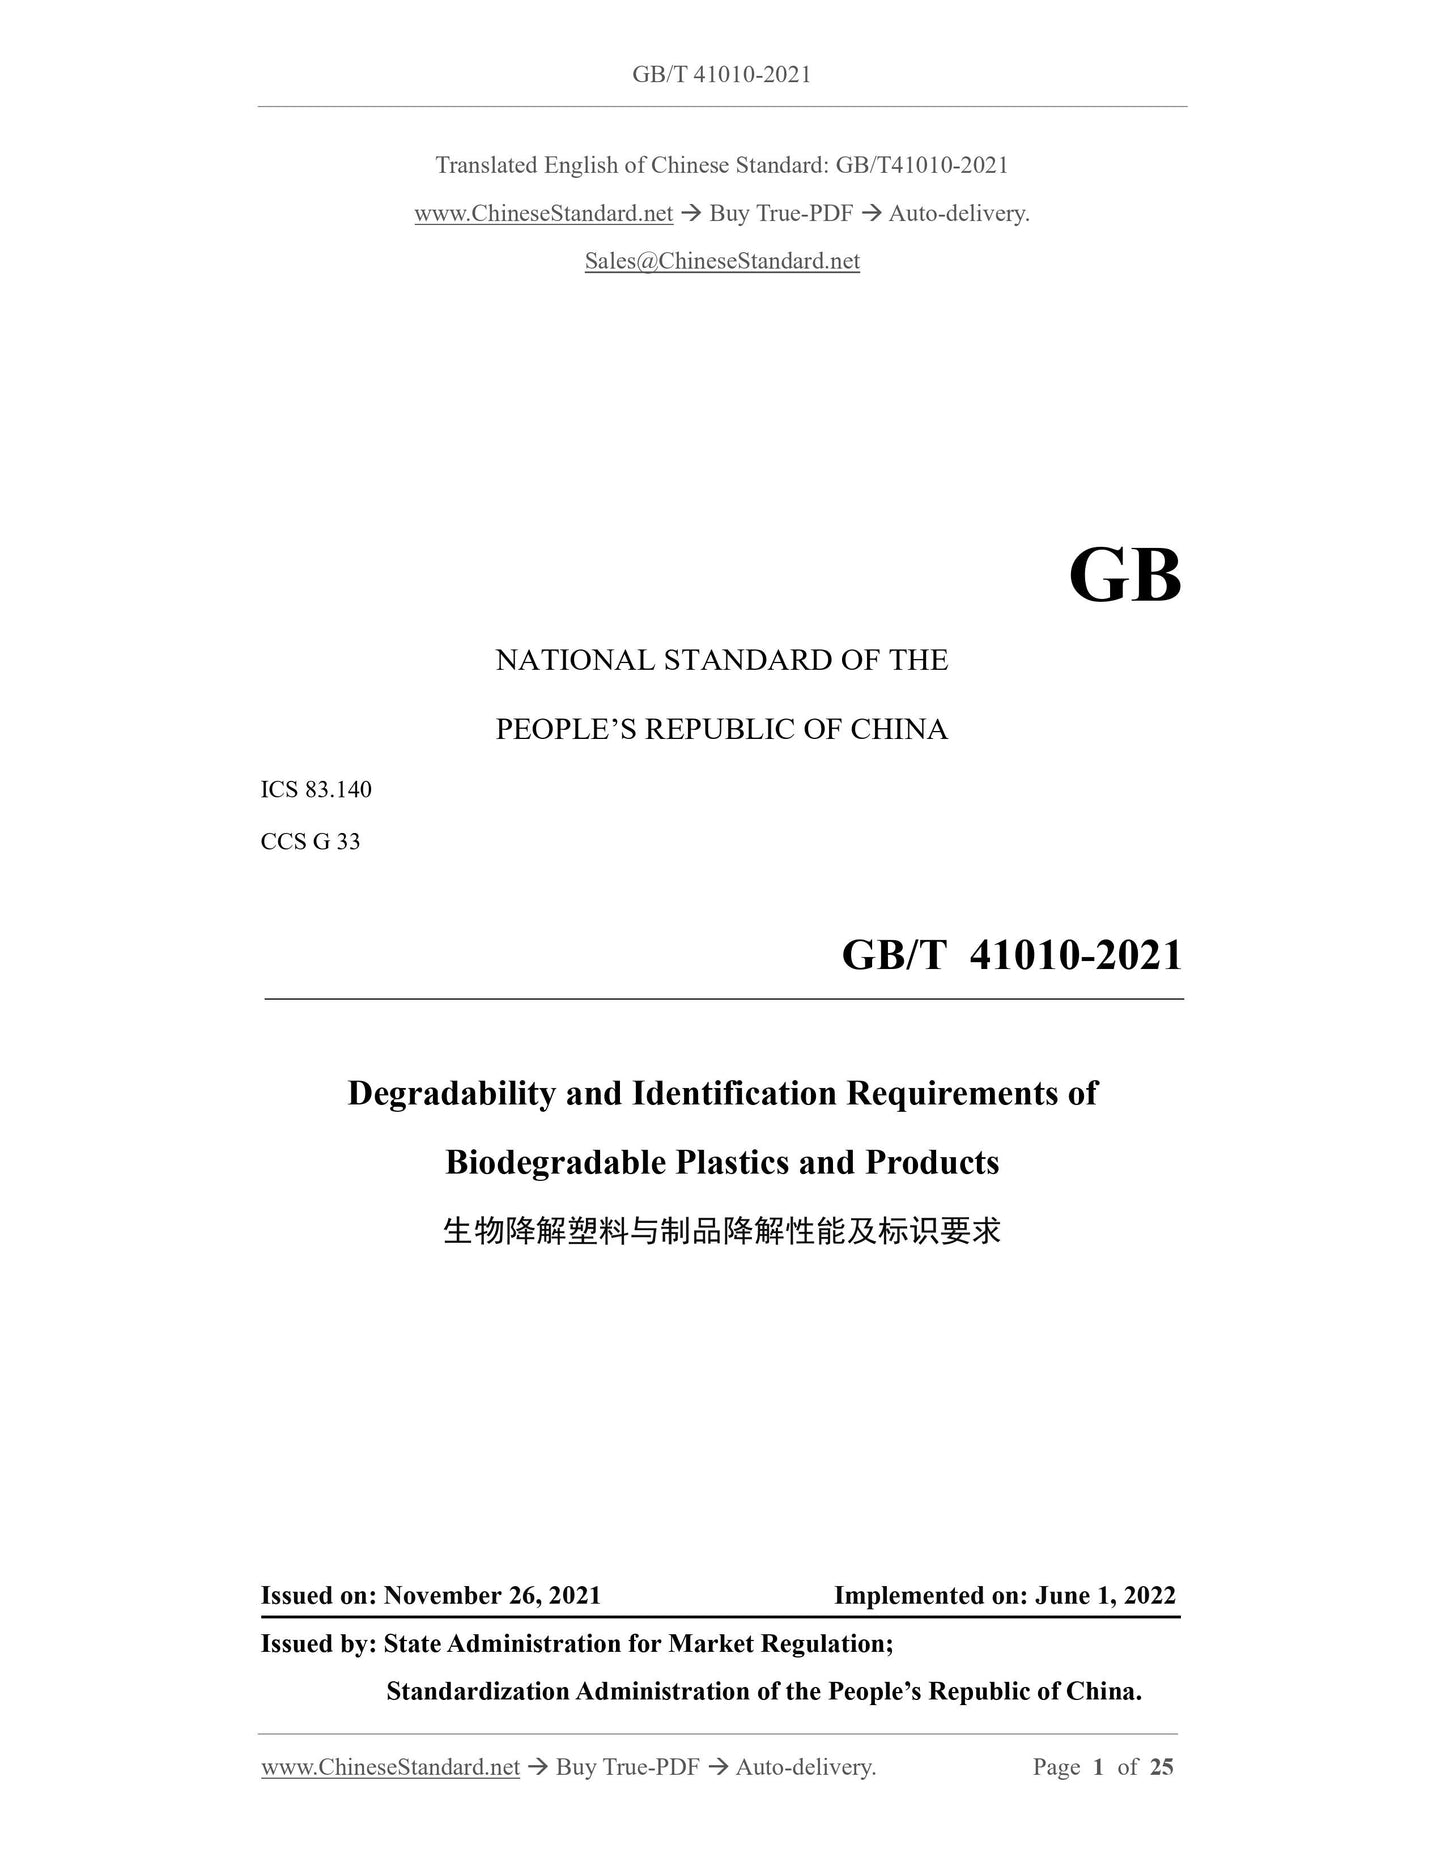 GBT41010-2021 Page 1